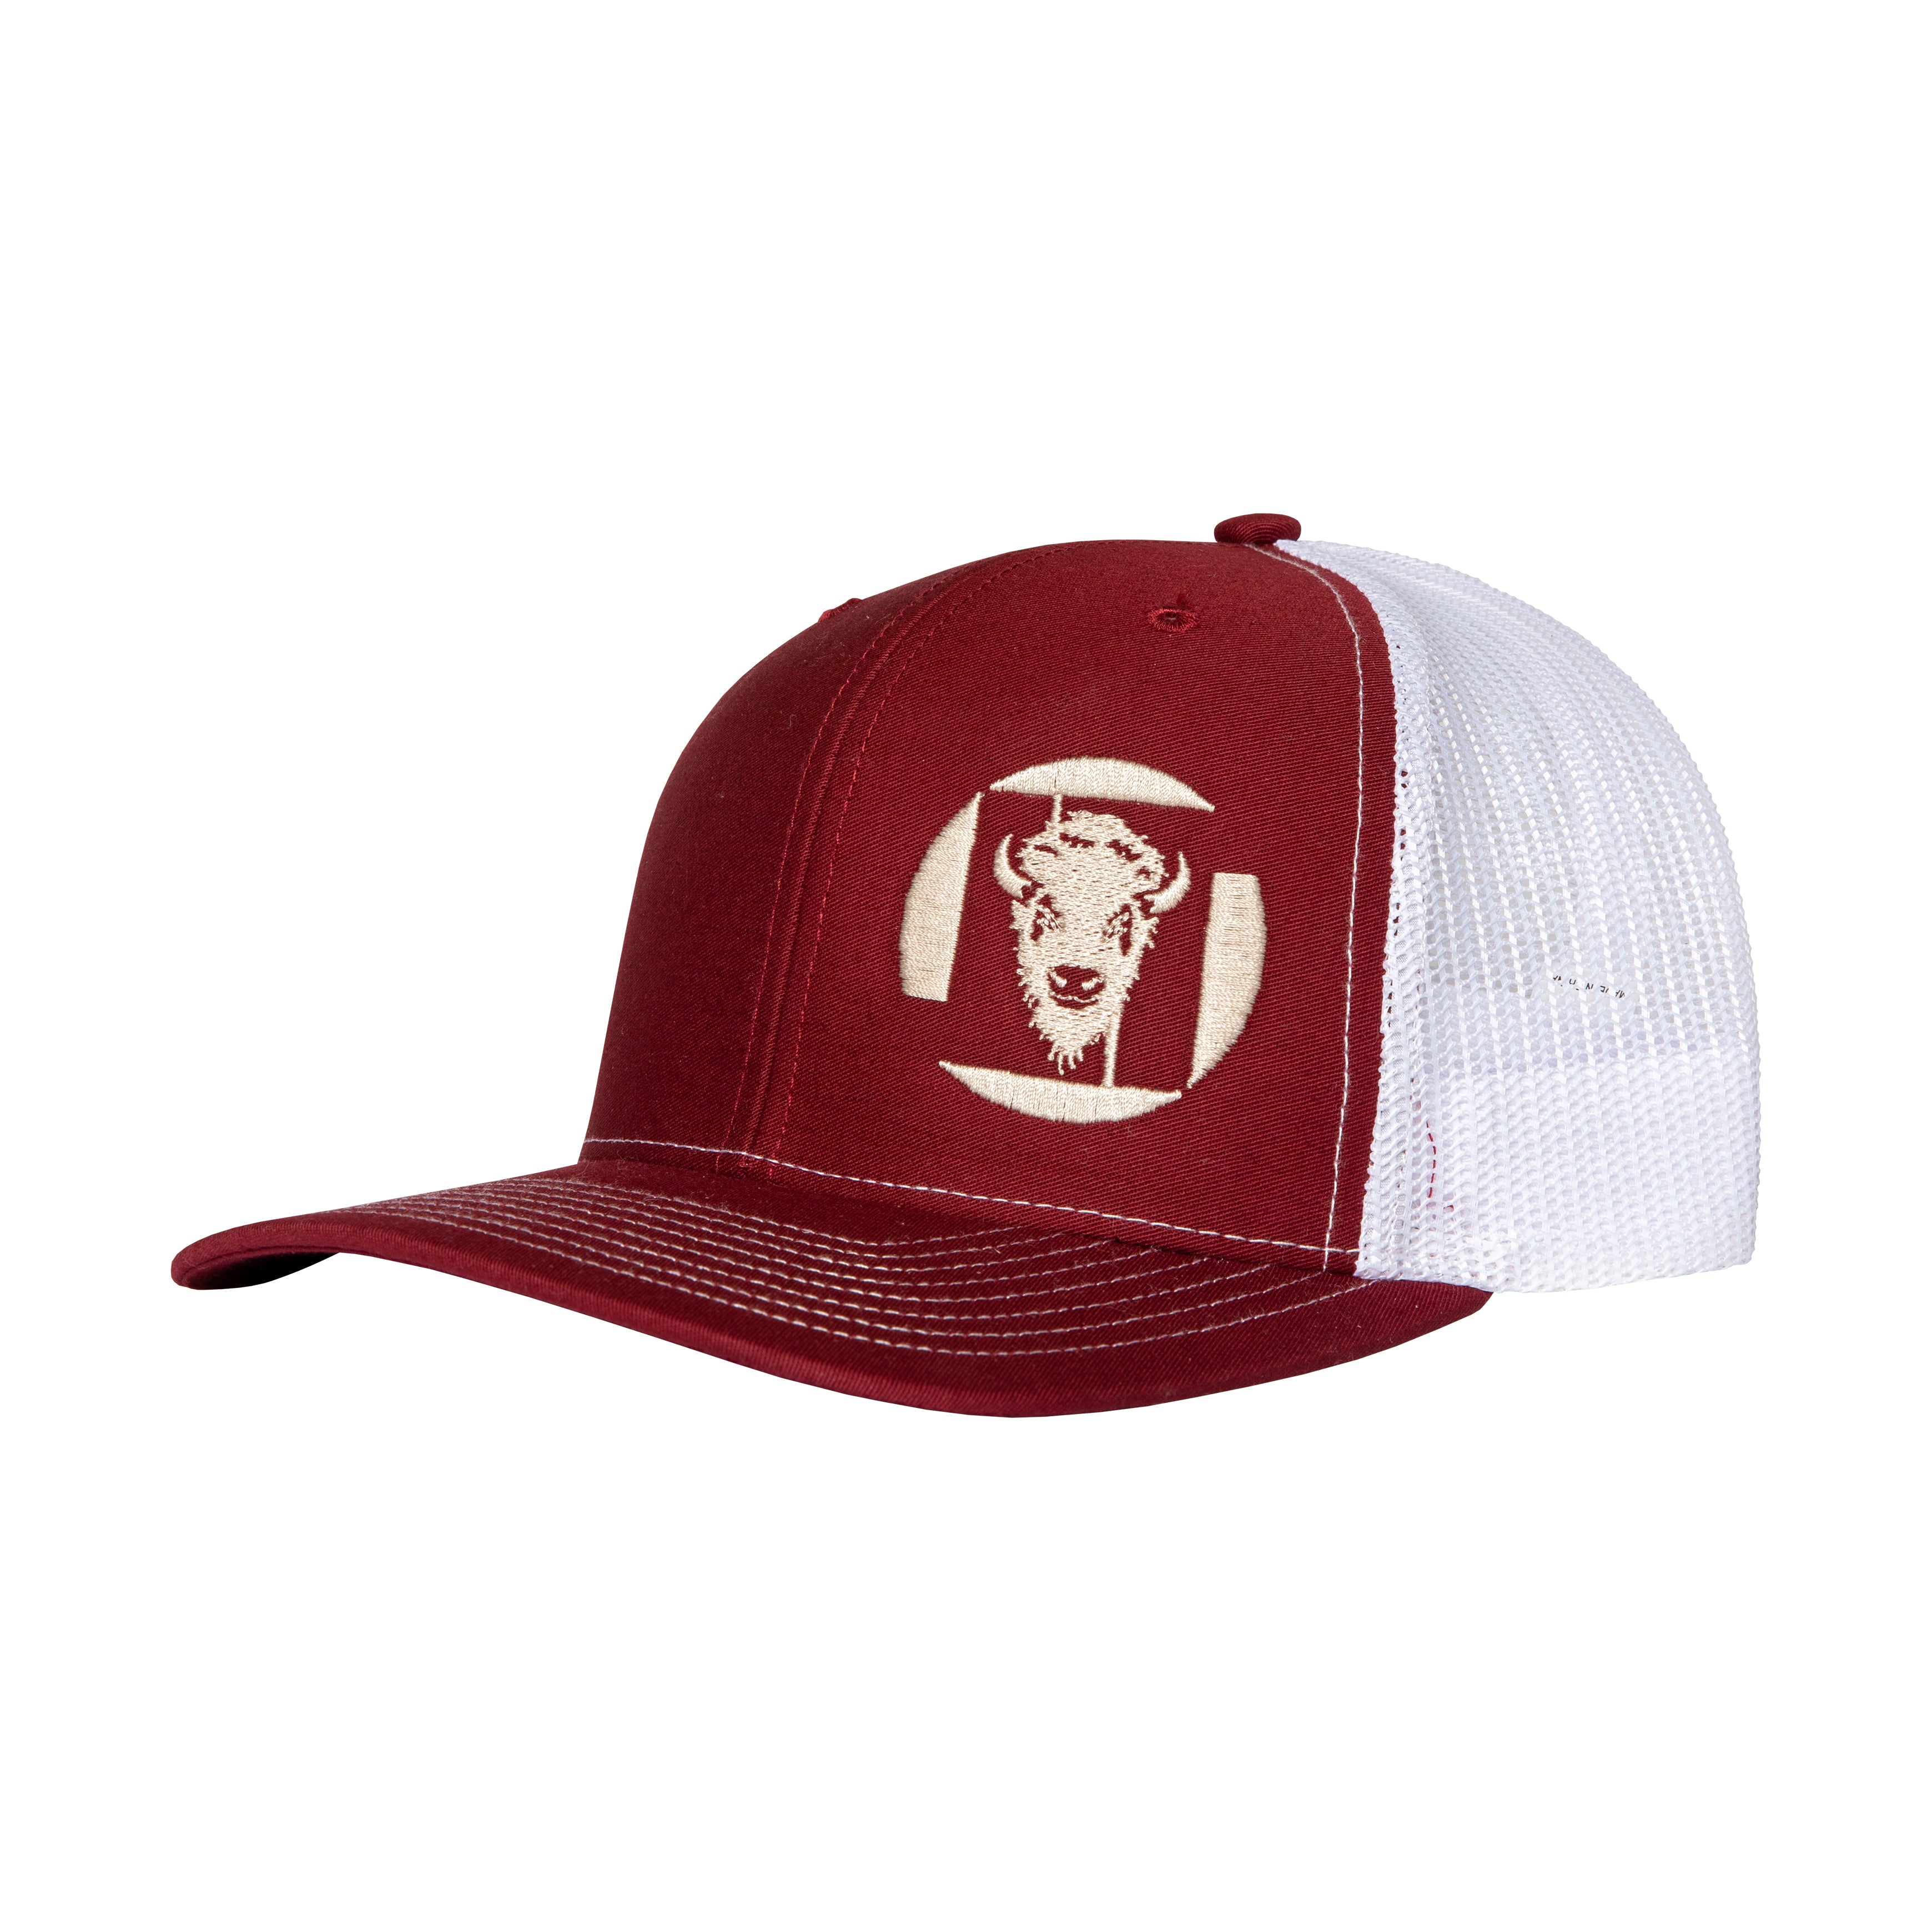 LT Logo Hat Maroon Crown/Brim with White Mesh Back (2 logo color options)